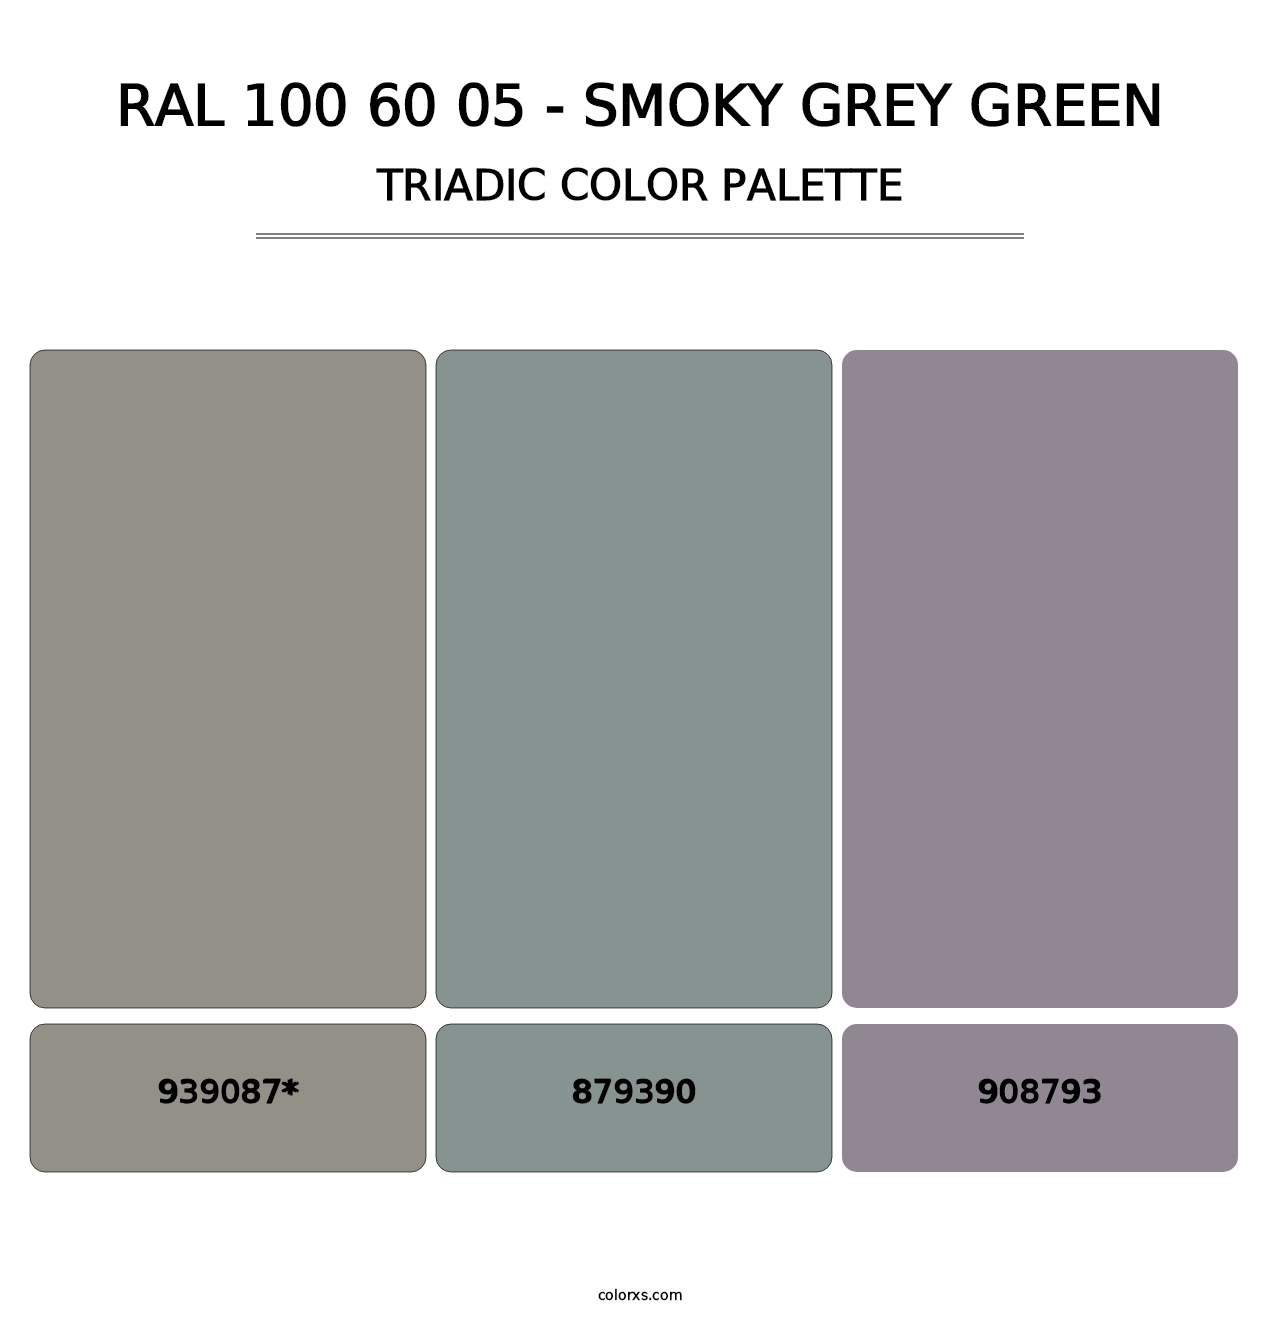 RAL 100 60 05 - Smoky Grey Green - Triadic Color Palette